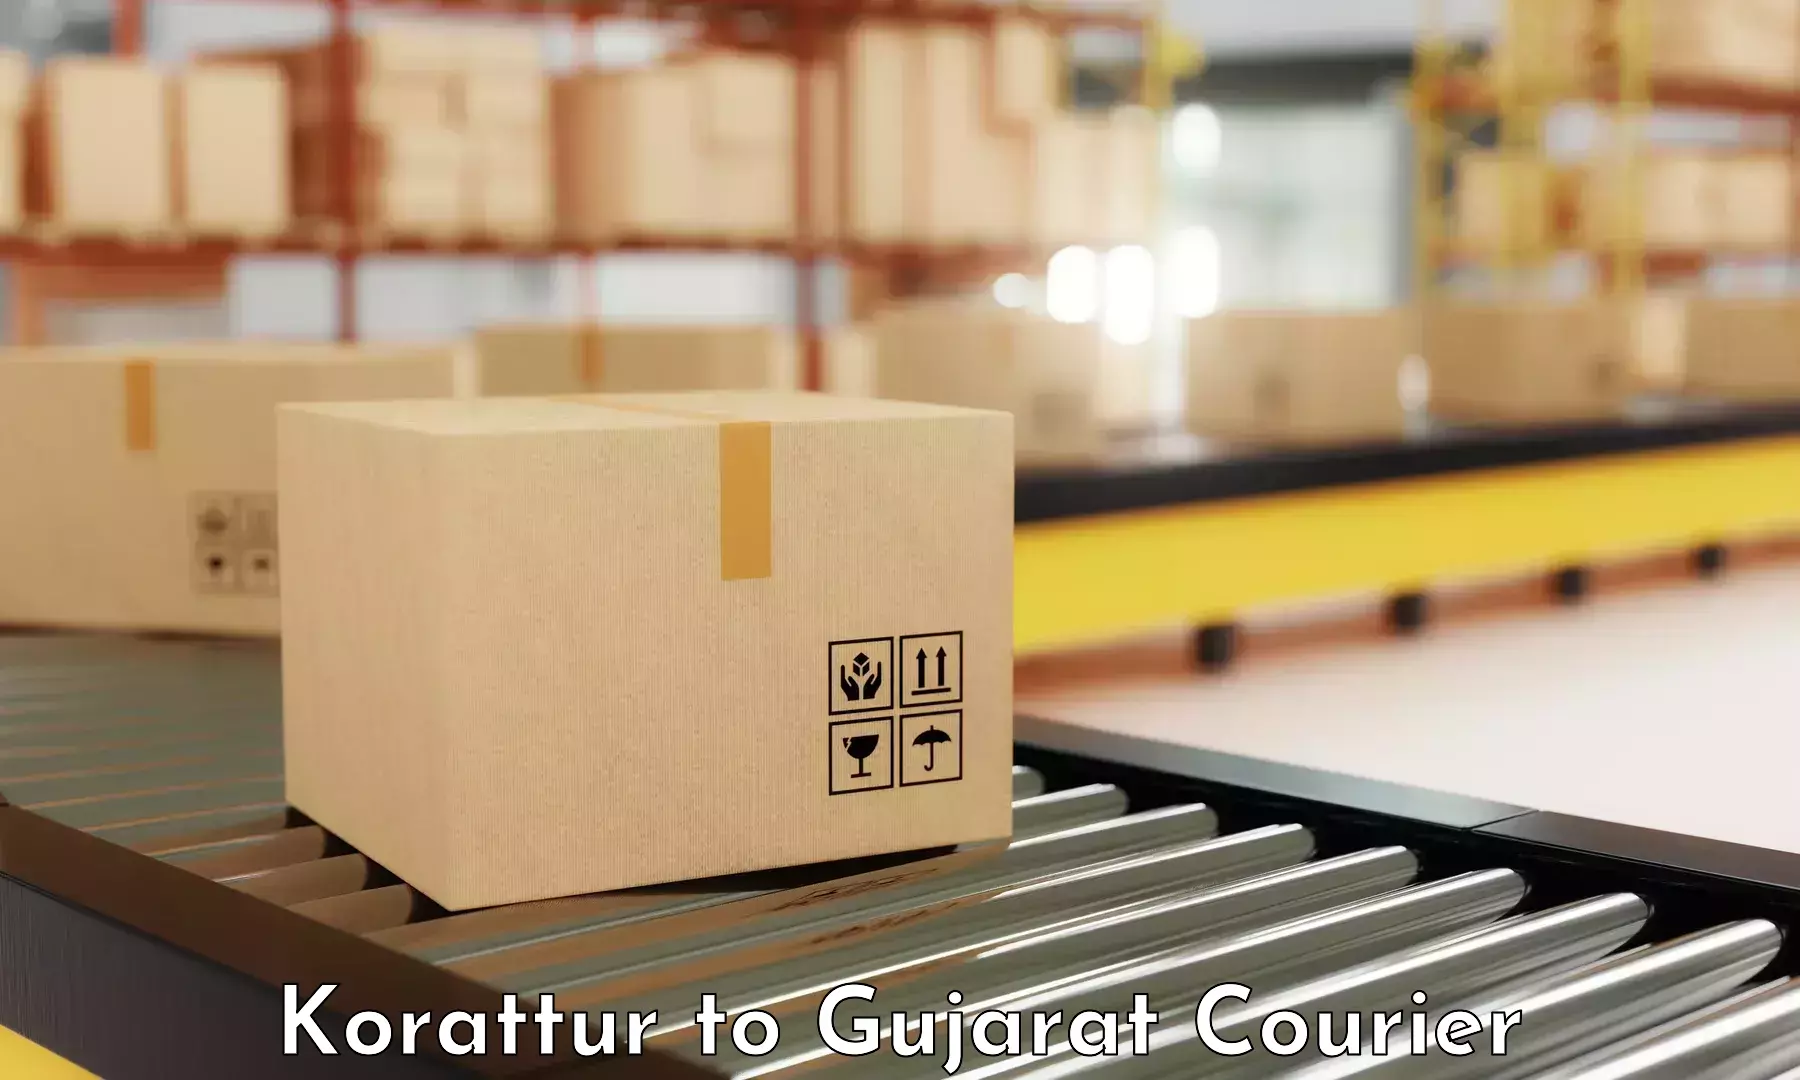 Advanced delivery network Korattur to Gujarat